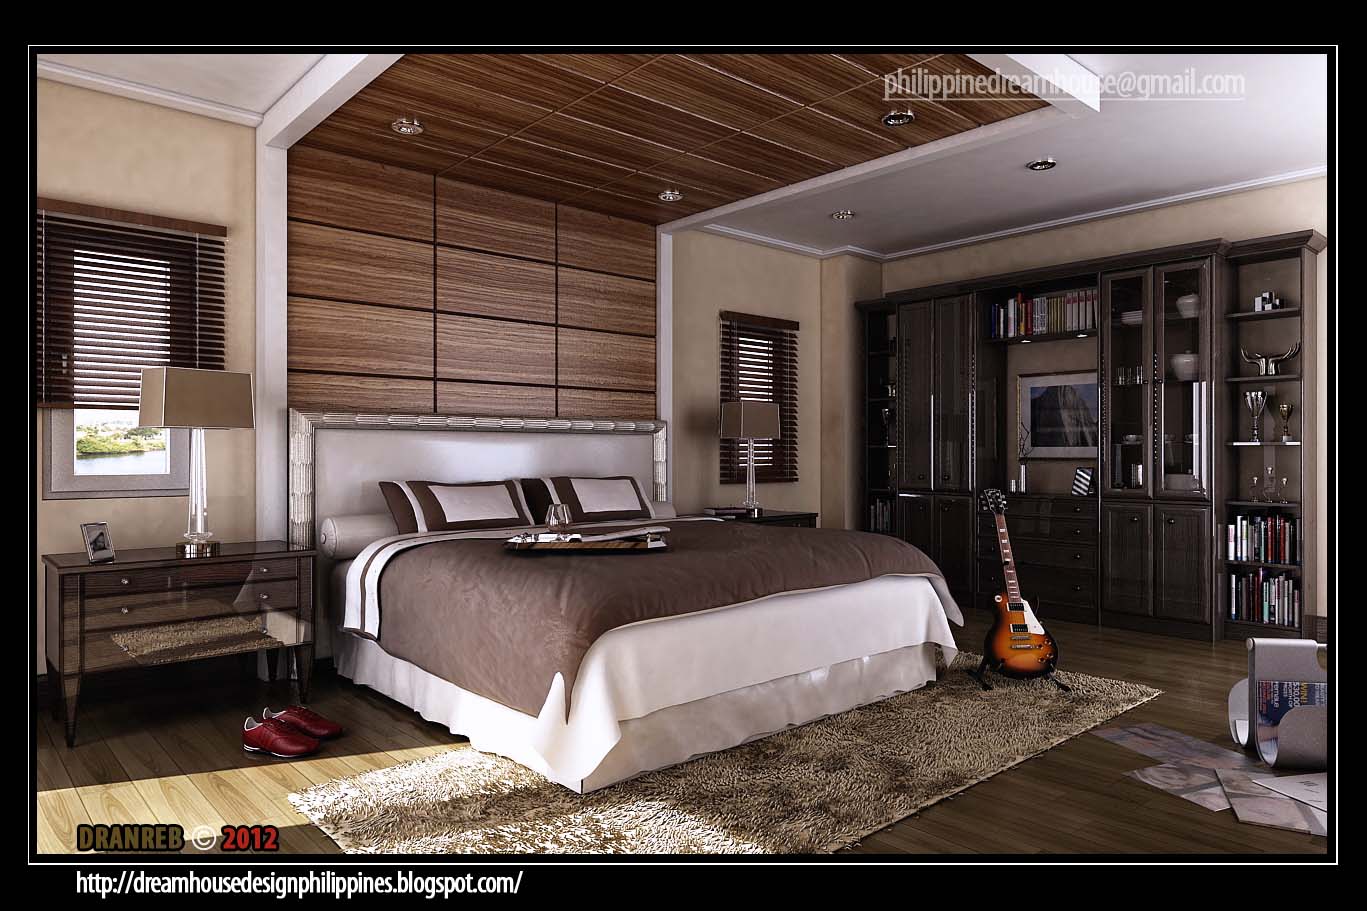 Philippine Dream House Design : The Master's Bedroom